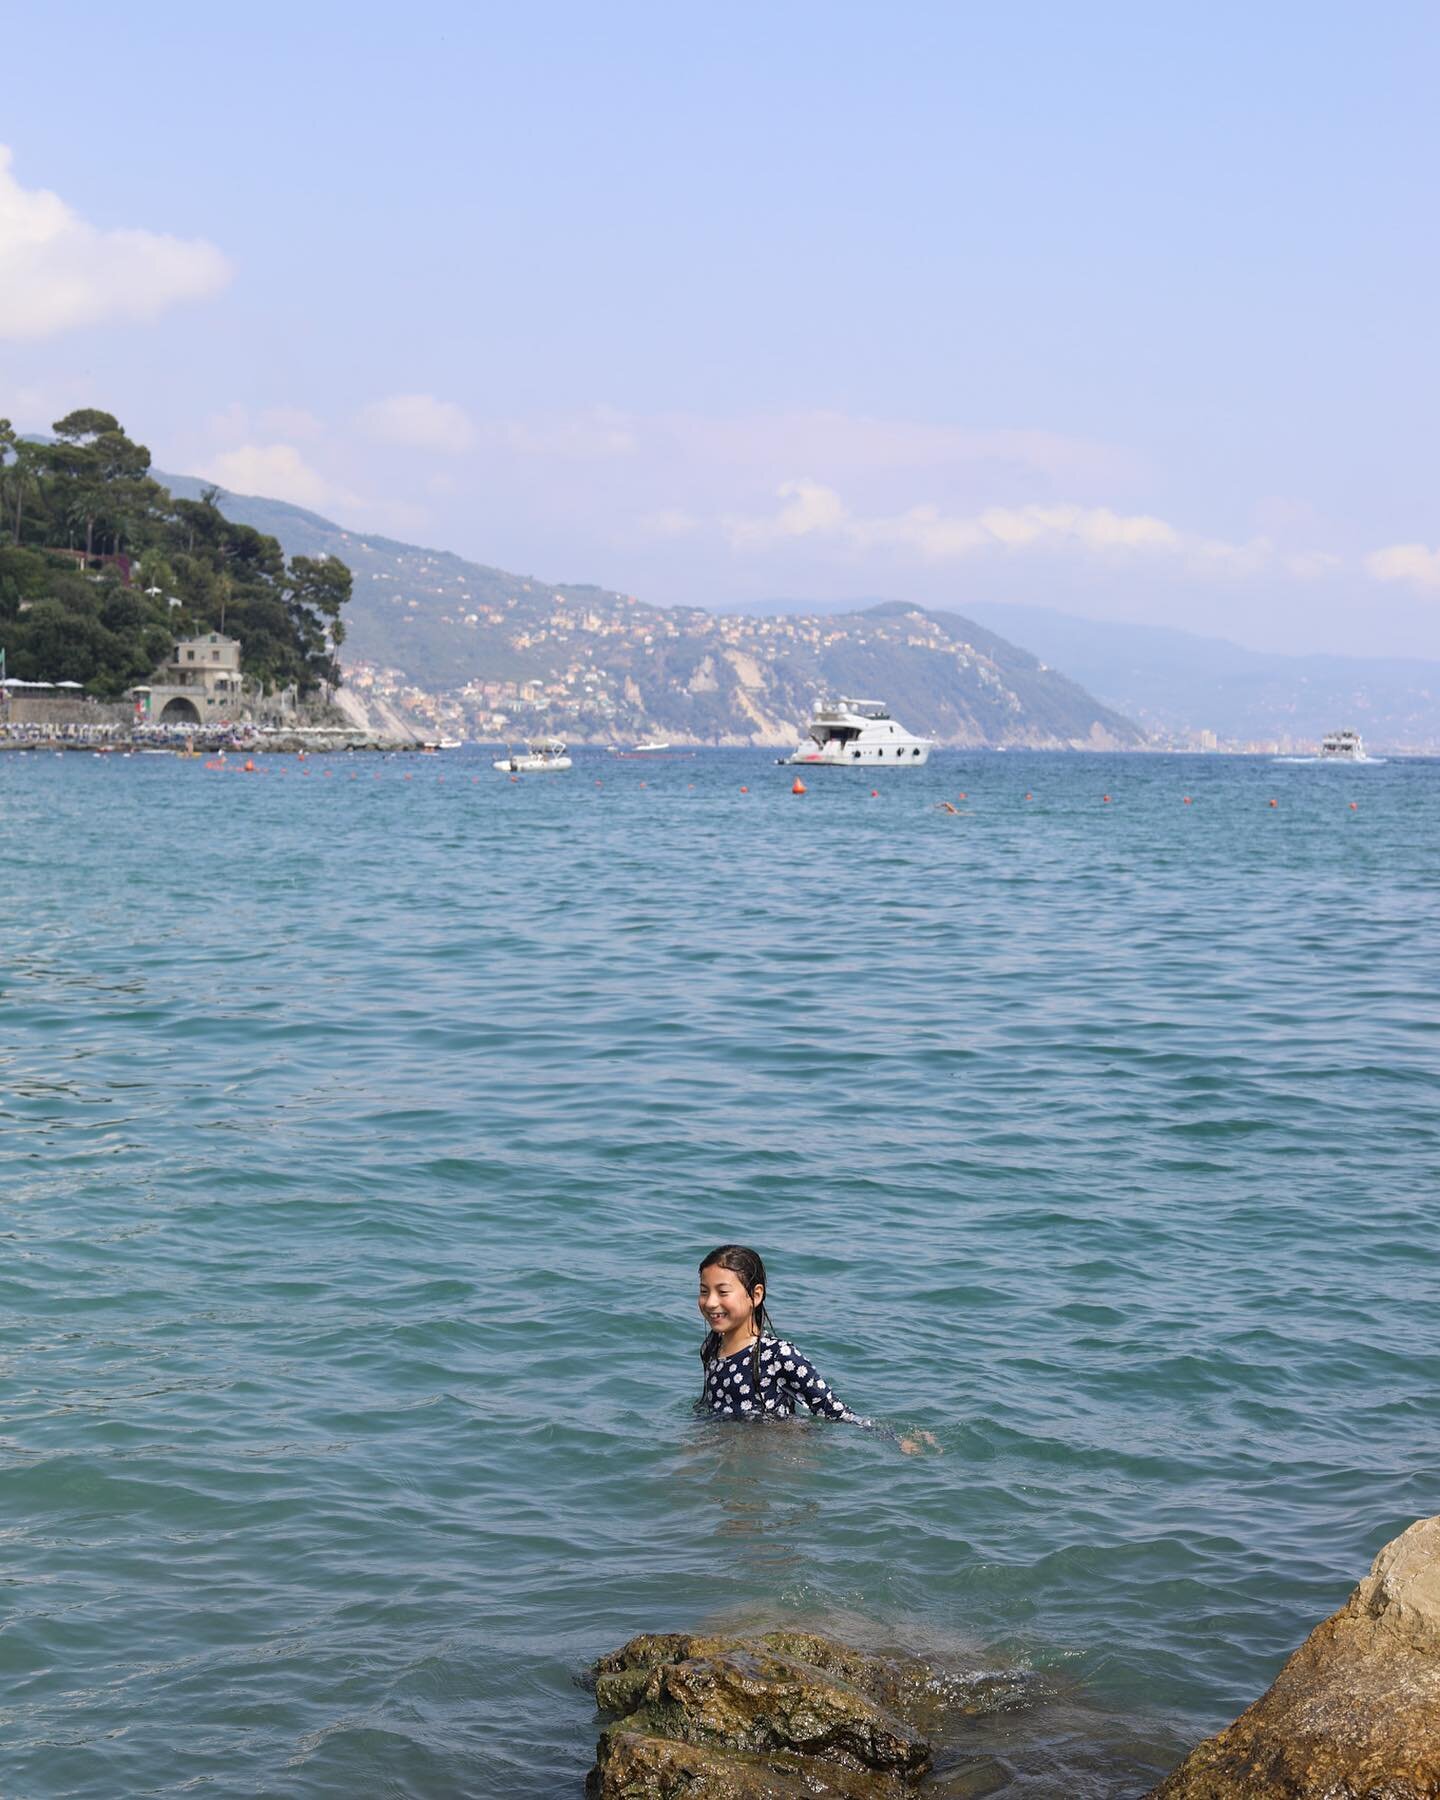 First dip in the Italian Riviera. In sun-soaked, sea-splashed Santa Margherita. 
.
.
.
#italy #travelgram #travelitaly #travel #outdoordining #interiordesign #design #interiors #italianriviera #santamargheritaligure #santamargherita